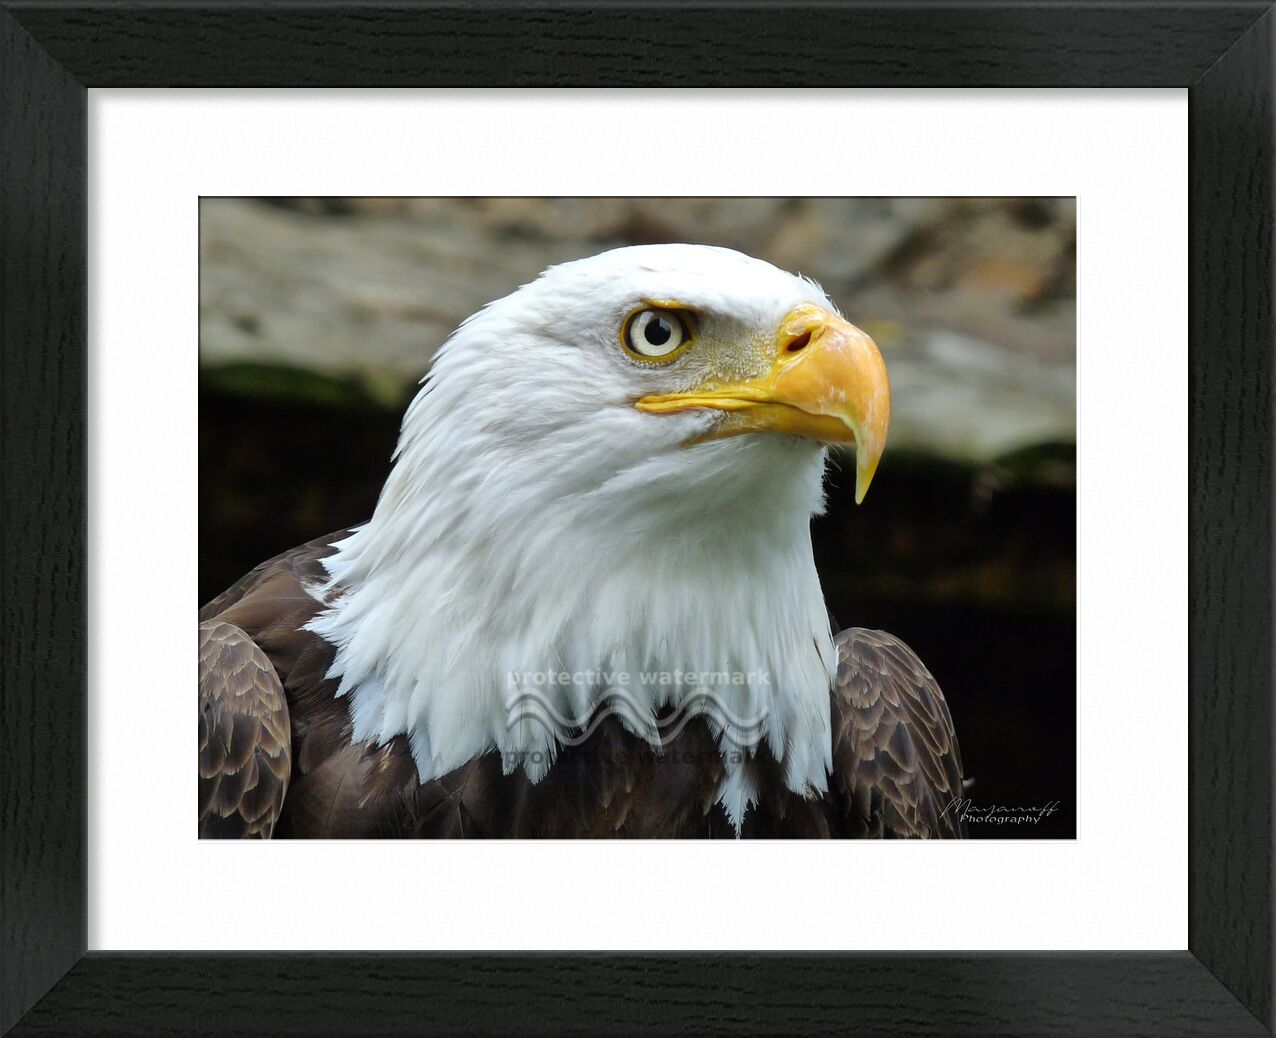 Eye of the Eagle from Mayanoff Photography, Prodi Art, bald eagle, eagle, eye, portrait, raptor, bird, eagle, eye, bird of prey, Bald Eagle, pygargue, fishing eagle, fish eagle